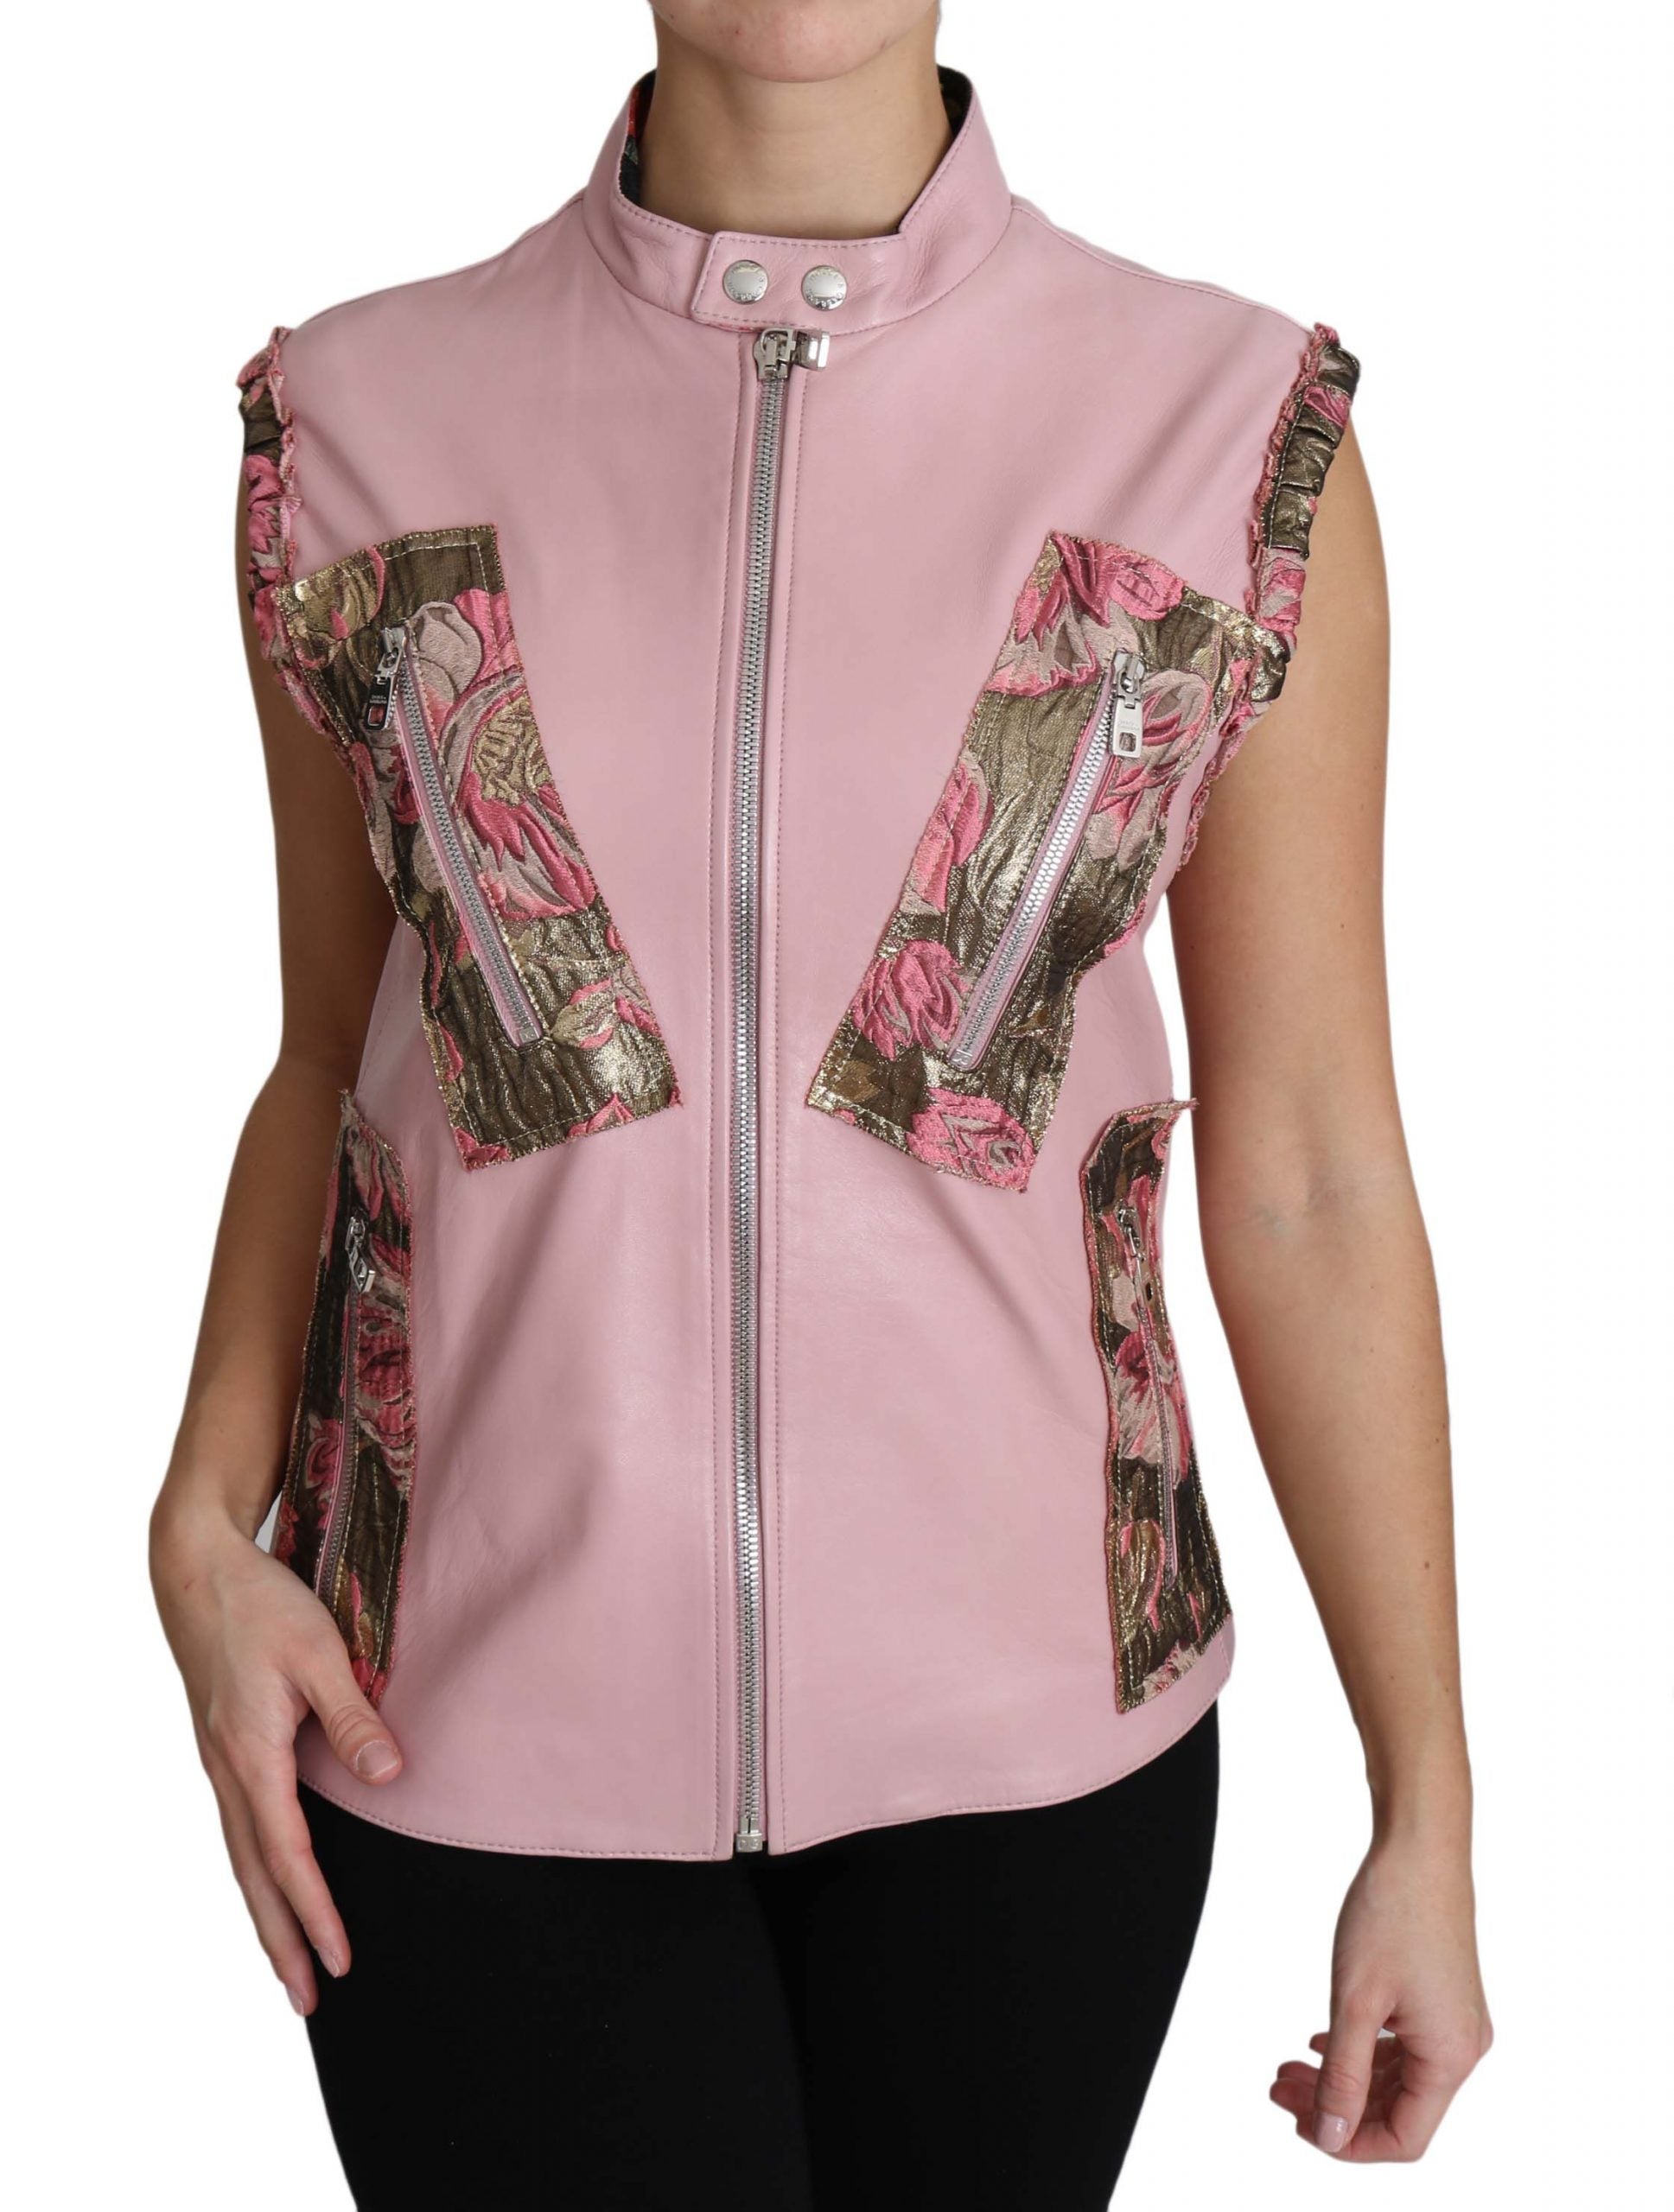 Dolce & Gabbana Pink Zippered Lamb Sleeveless Vest Leather Jacket - Gio Beverly Hills